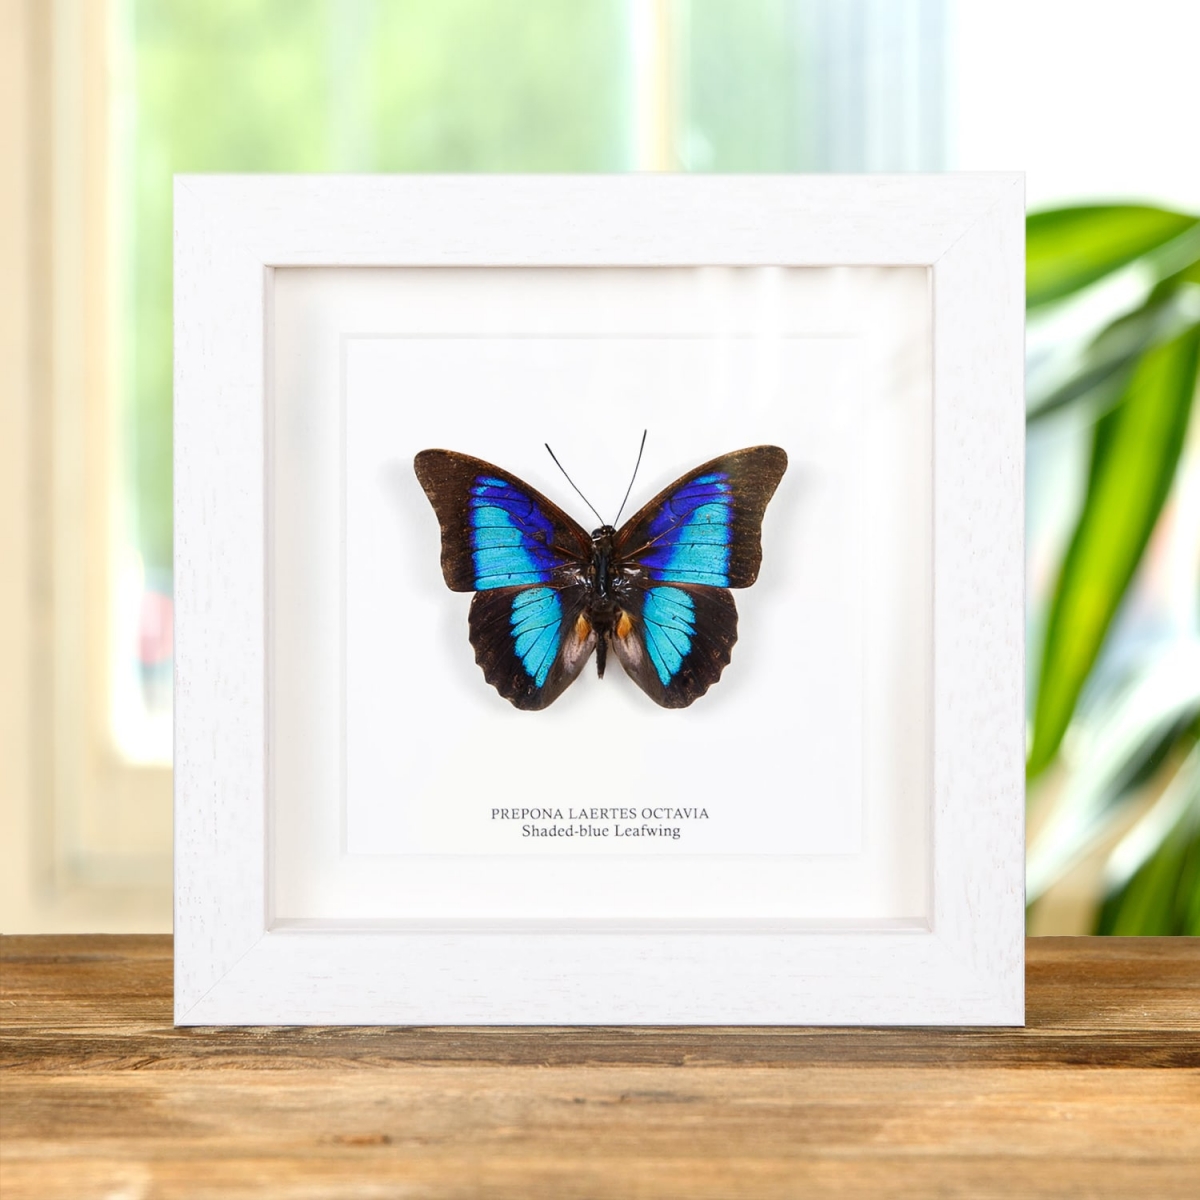 Shaded-blue Leafwing in Box Frame (Prepona Laertes octavia)